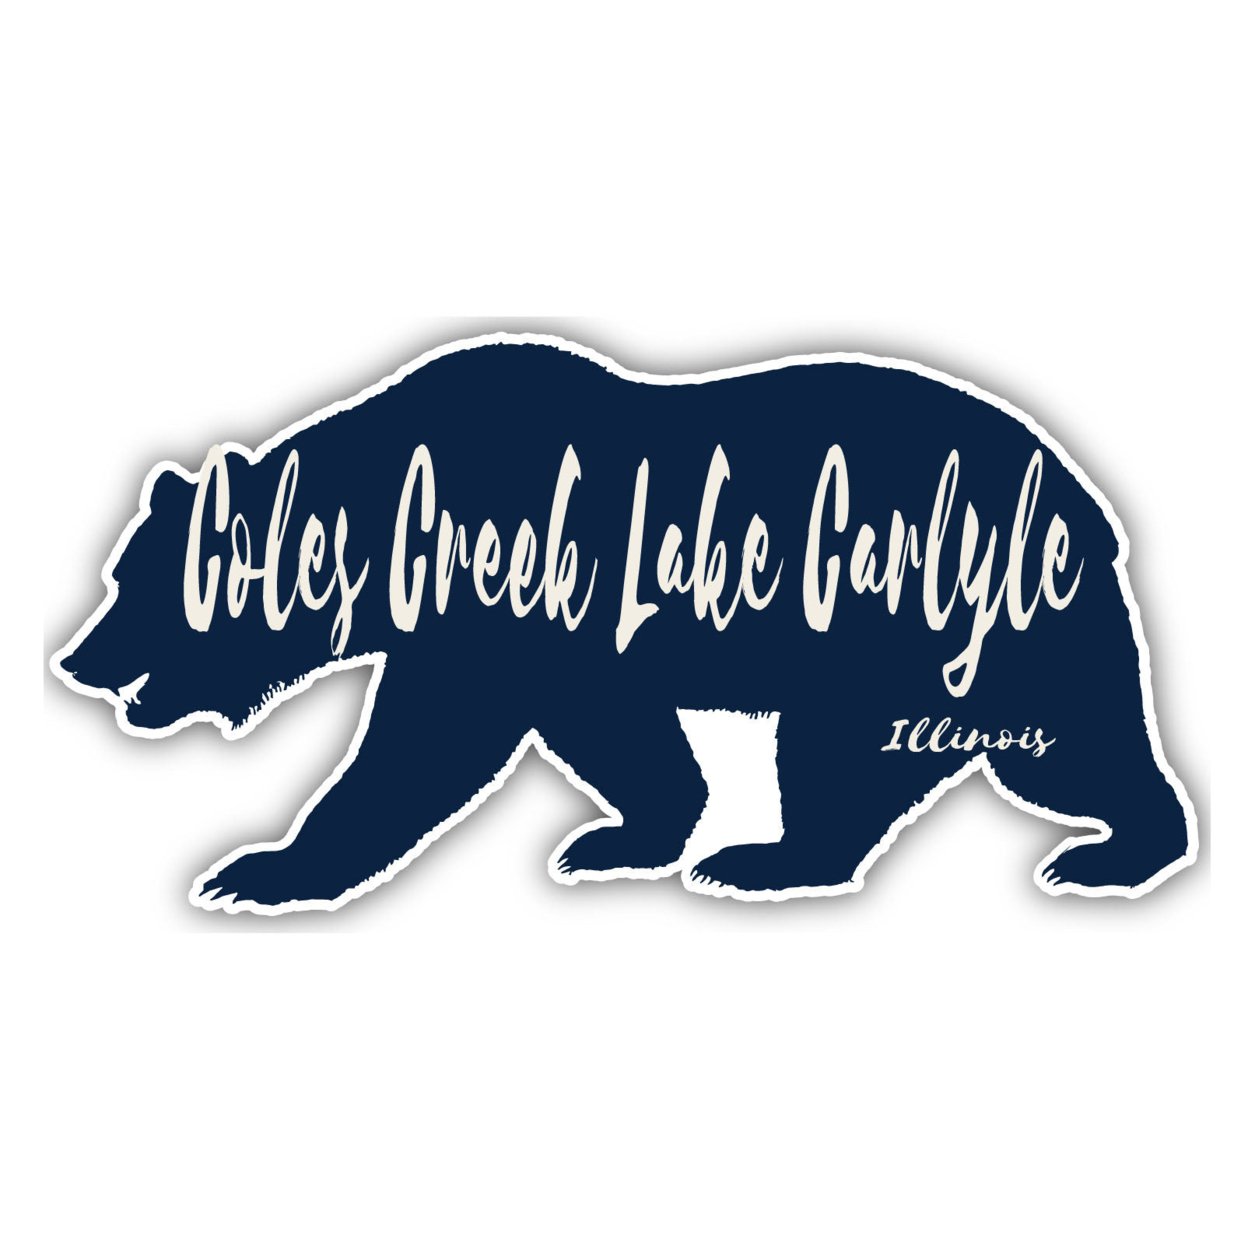 Coles Creek Lake Carlyle Illinois Souvenir Decorative Stickers (Choose Theme And Size) - Single Unit, 4-Inch, Bear